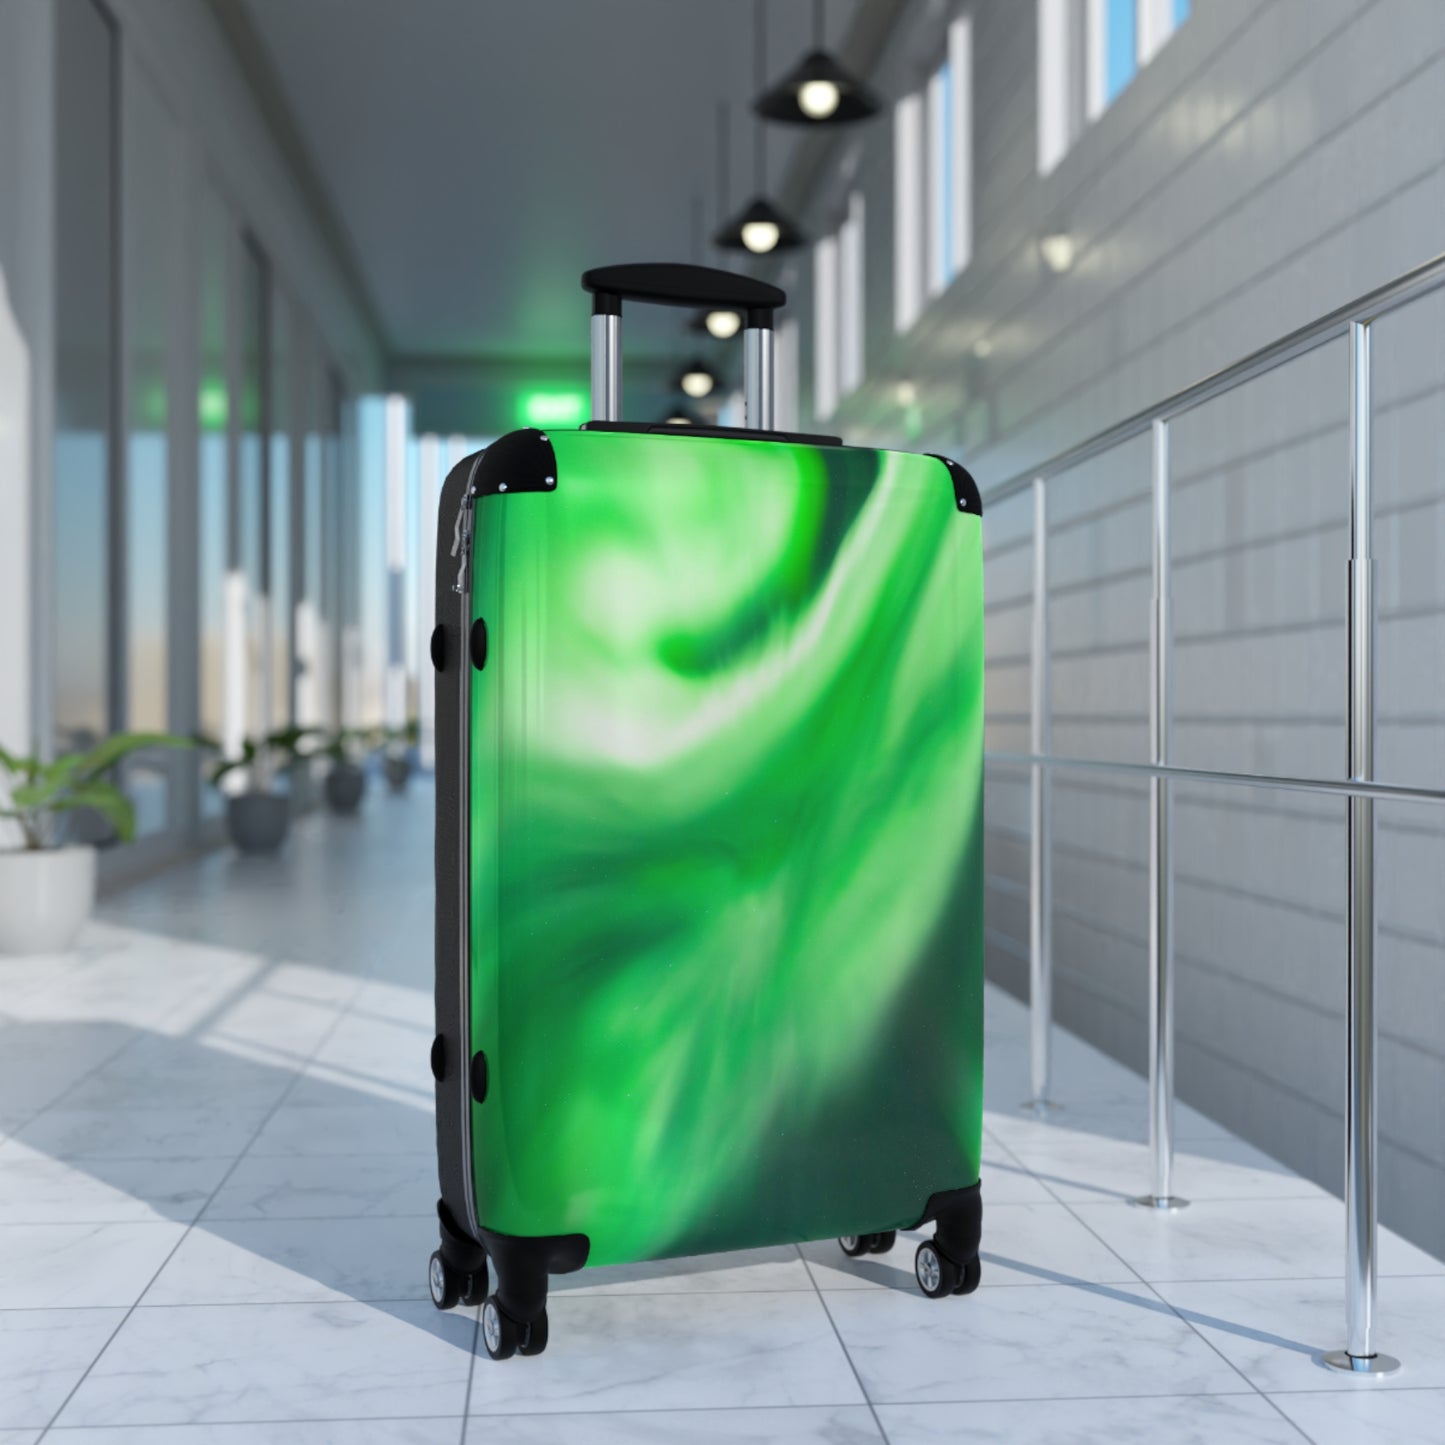 Aurora Borealis Corona Pattern Suitcase